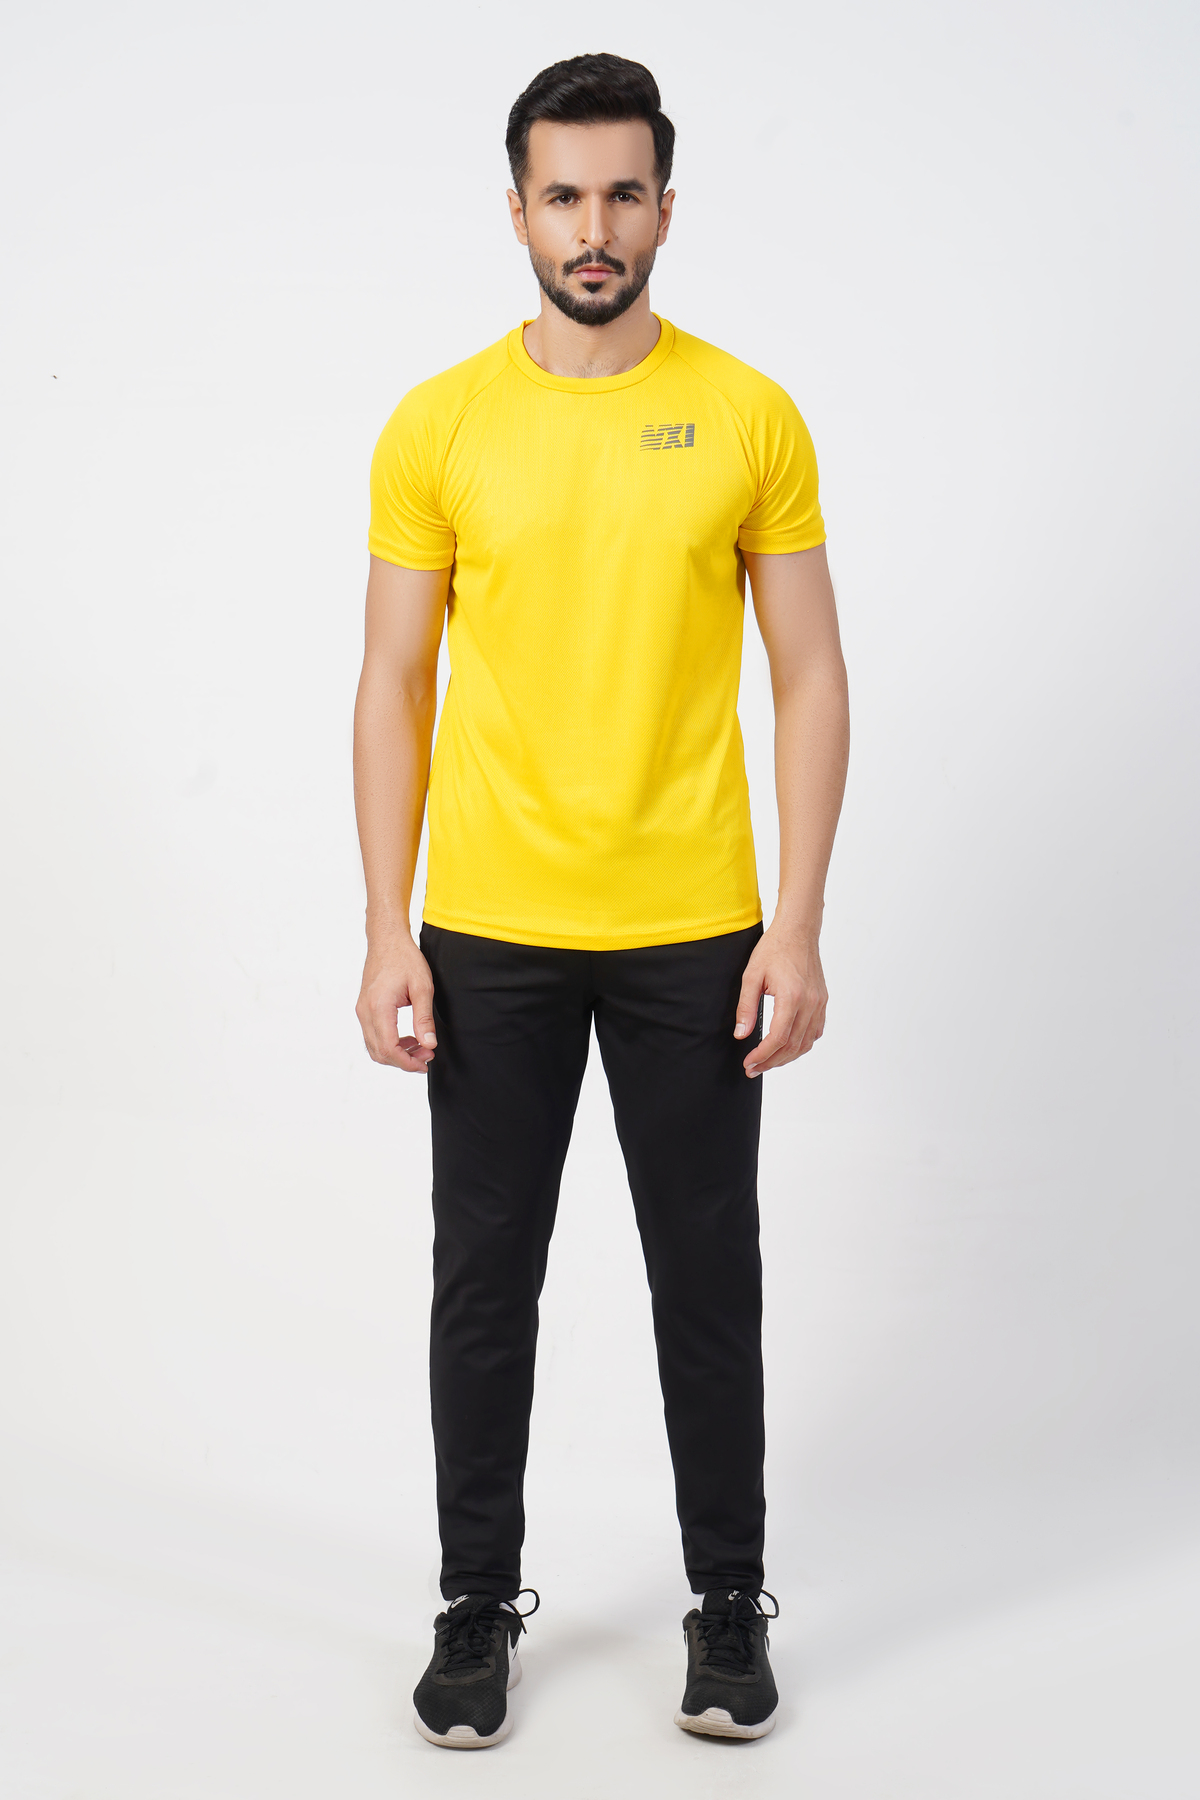 Micro Mesh Men's Yellow T-Shirt